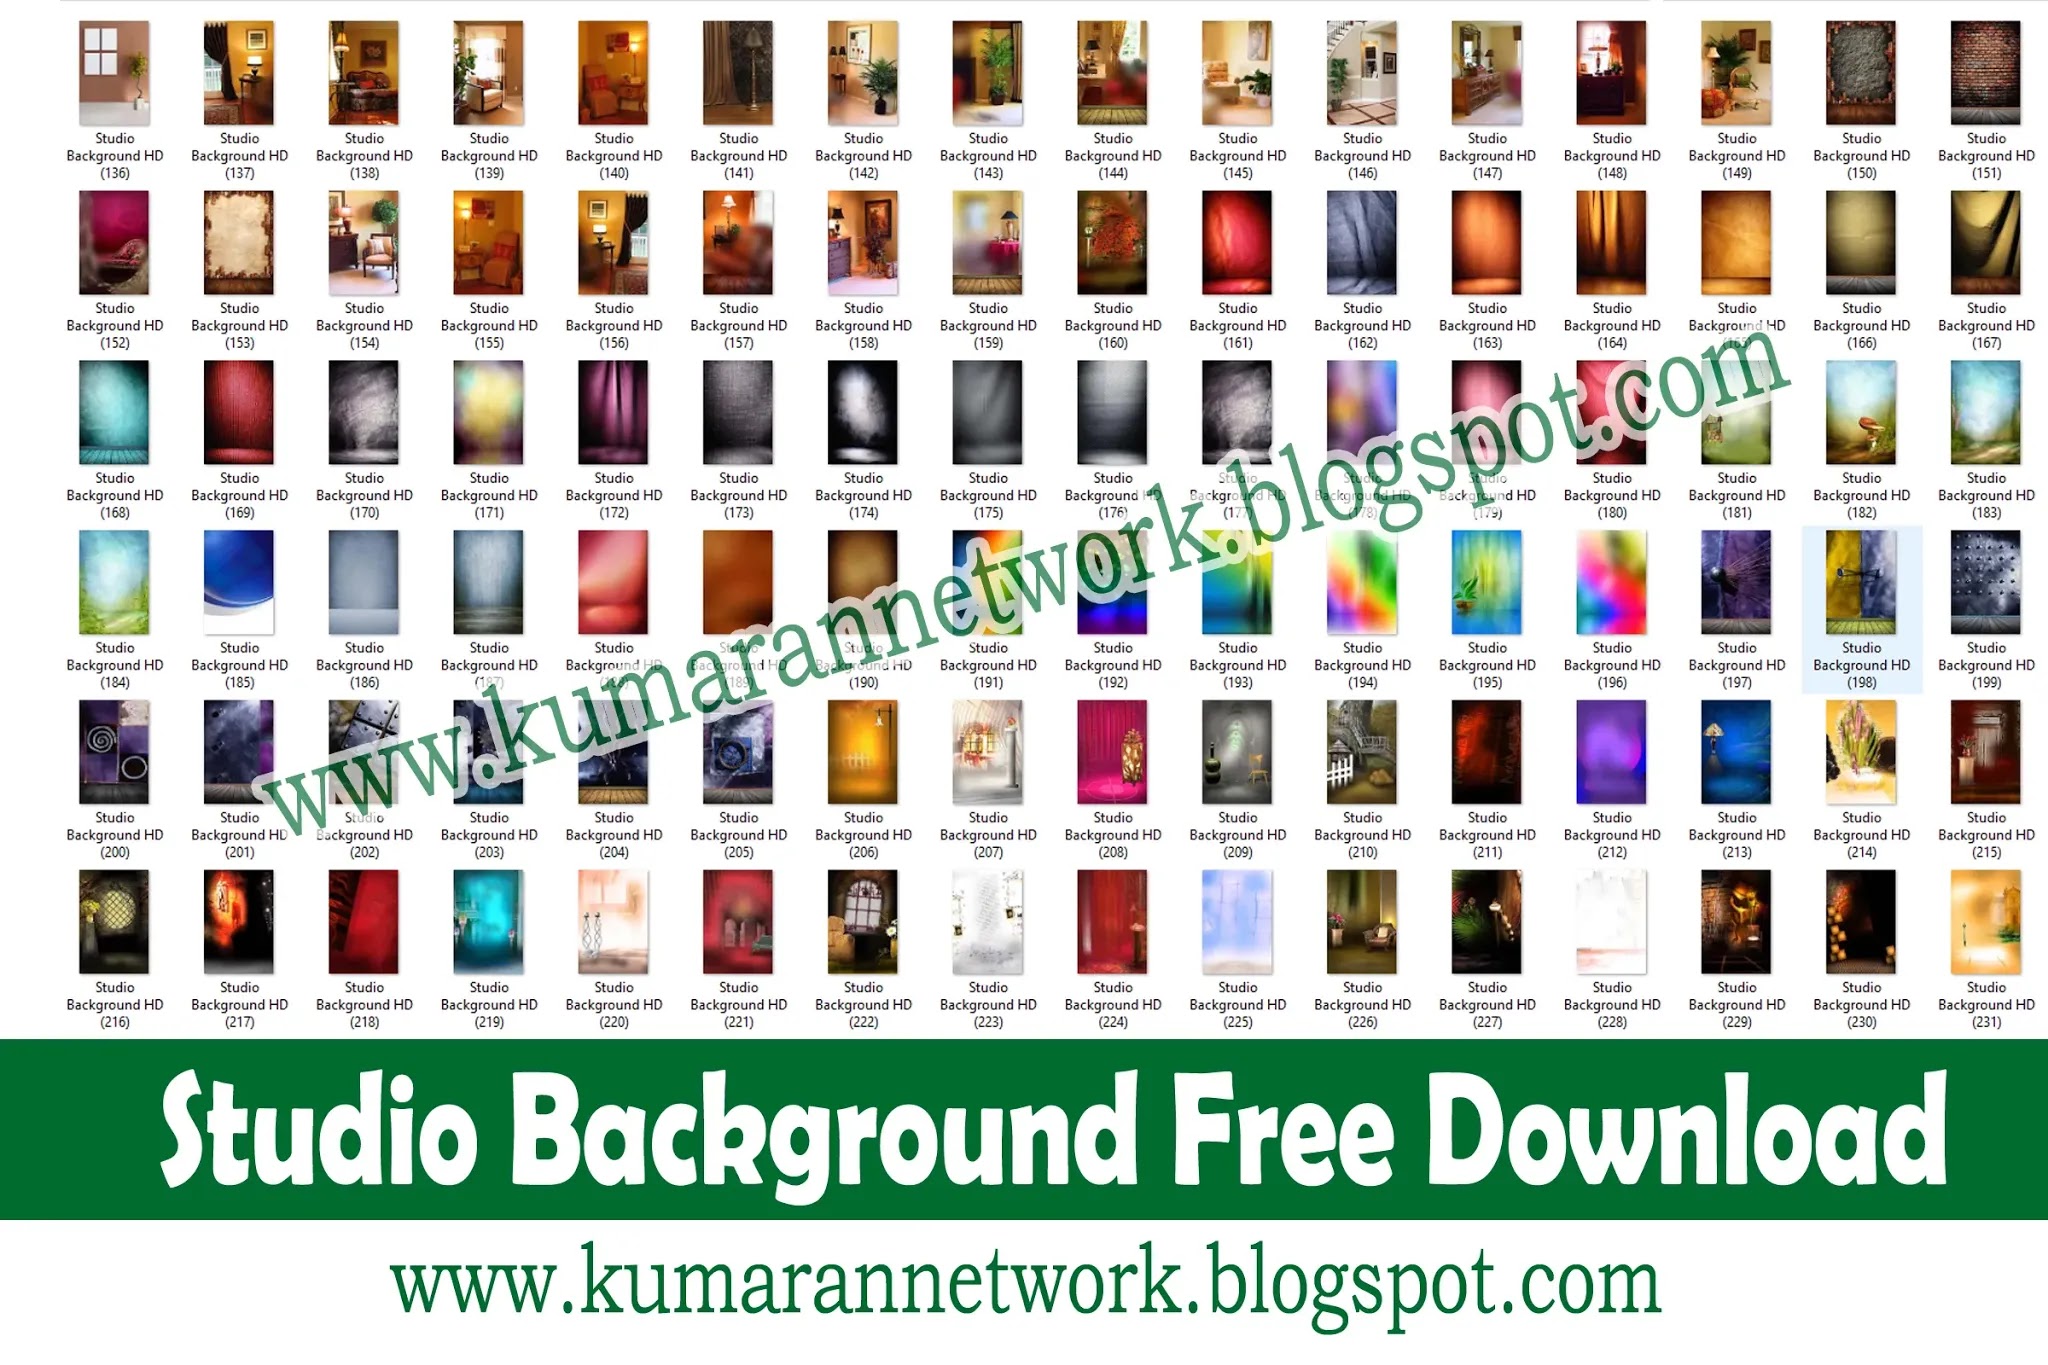 150 Studio Background hd Images Free Download - Kumaran Network